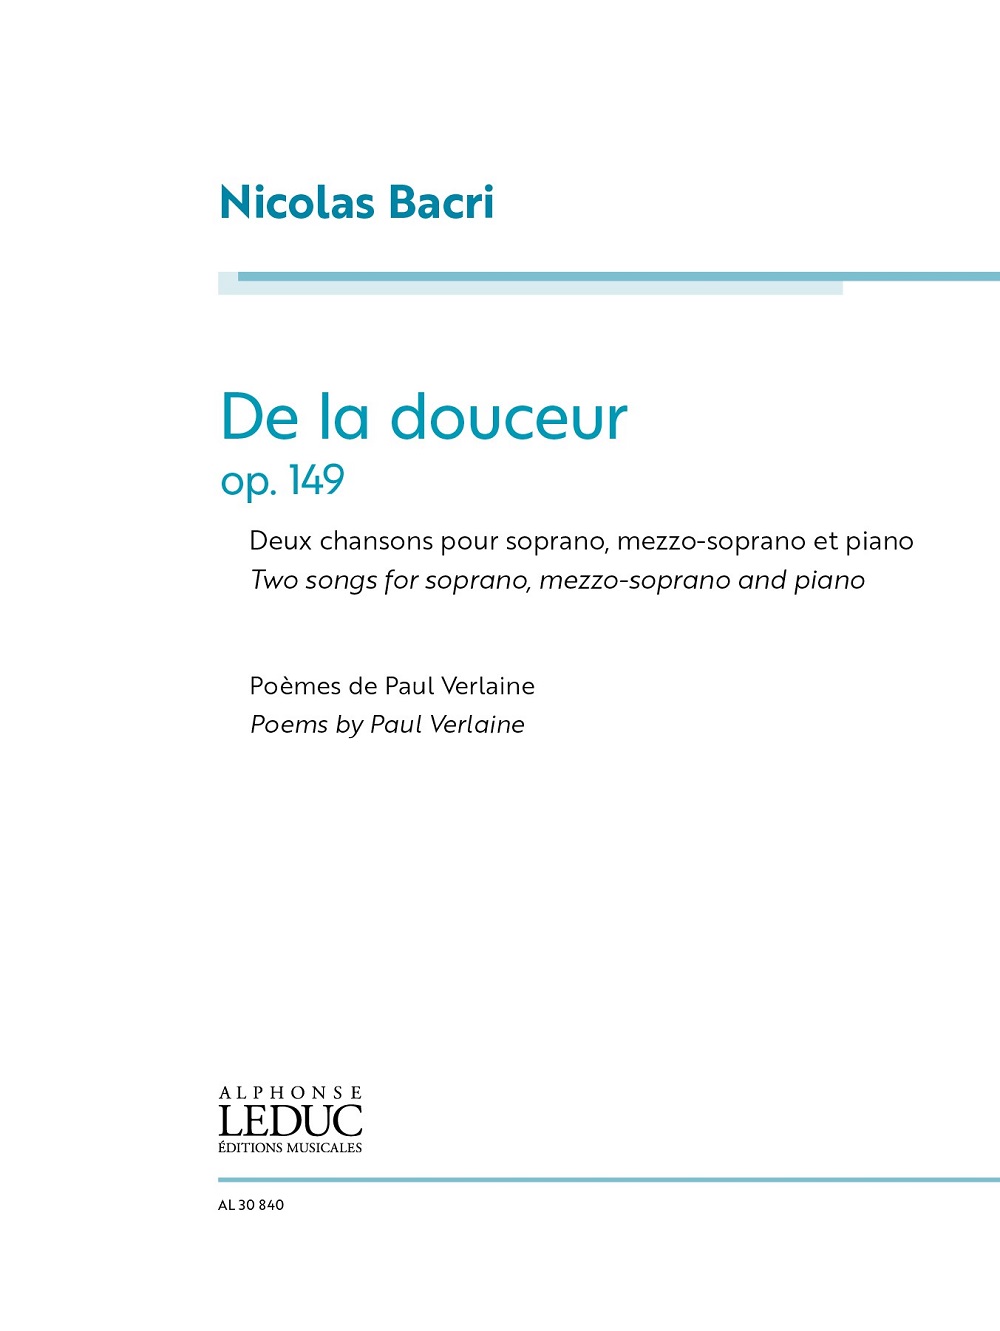 Nicolas Bacri: De la douceur: Vocal and Piano: Vocal Score